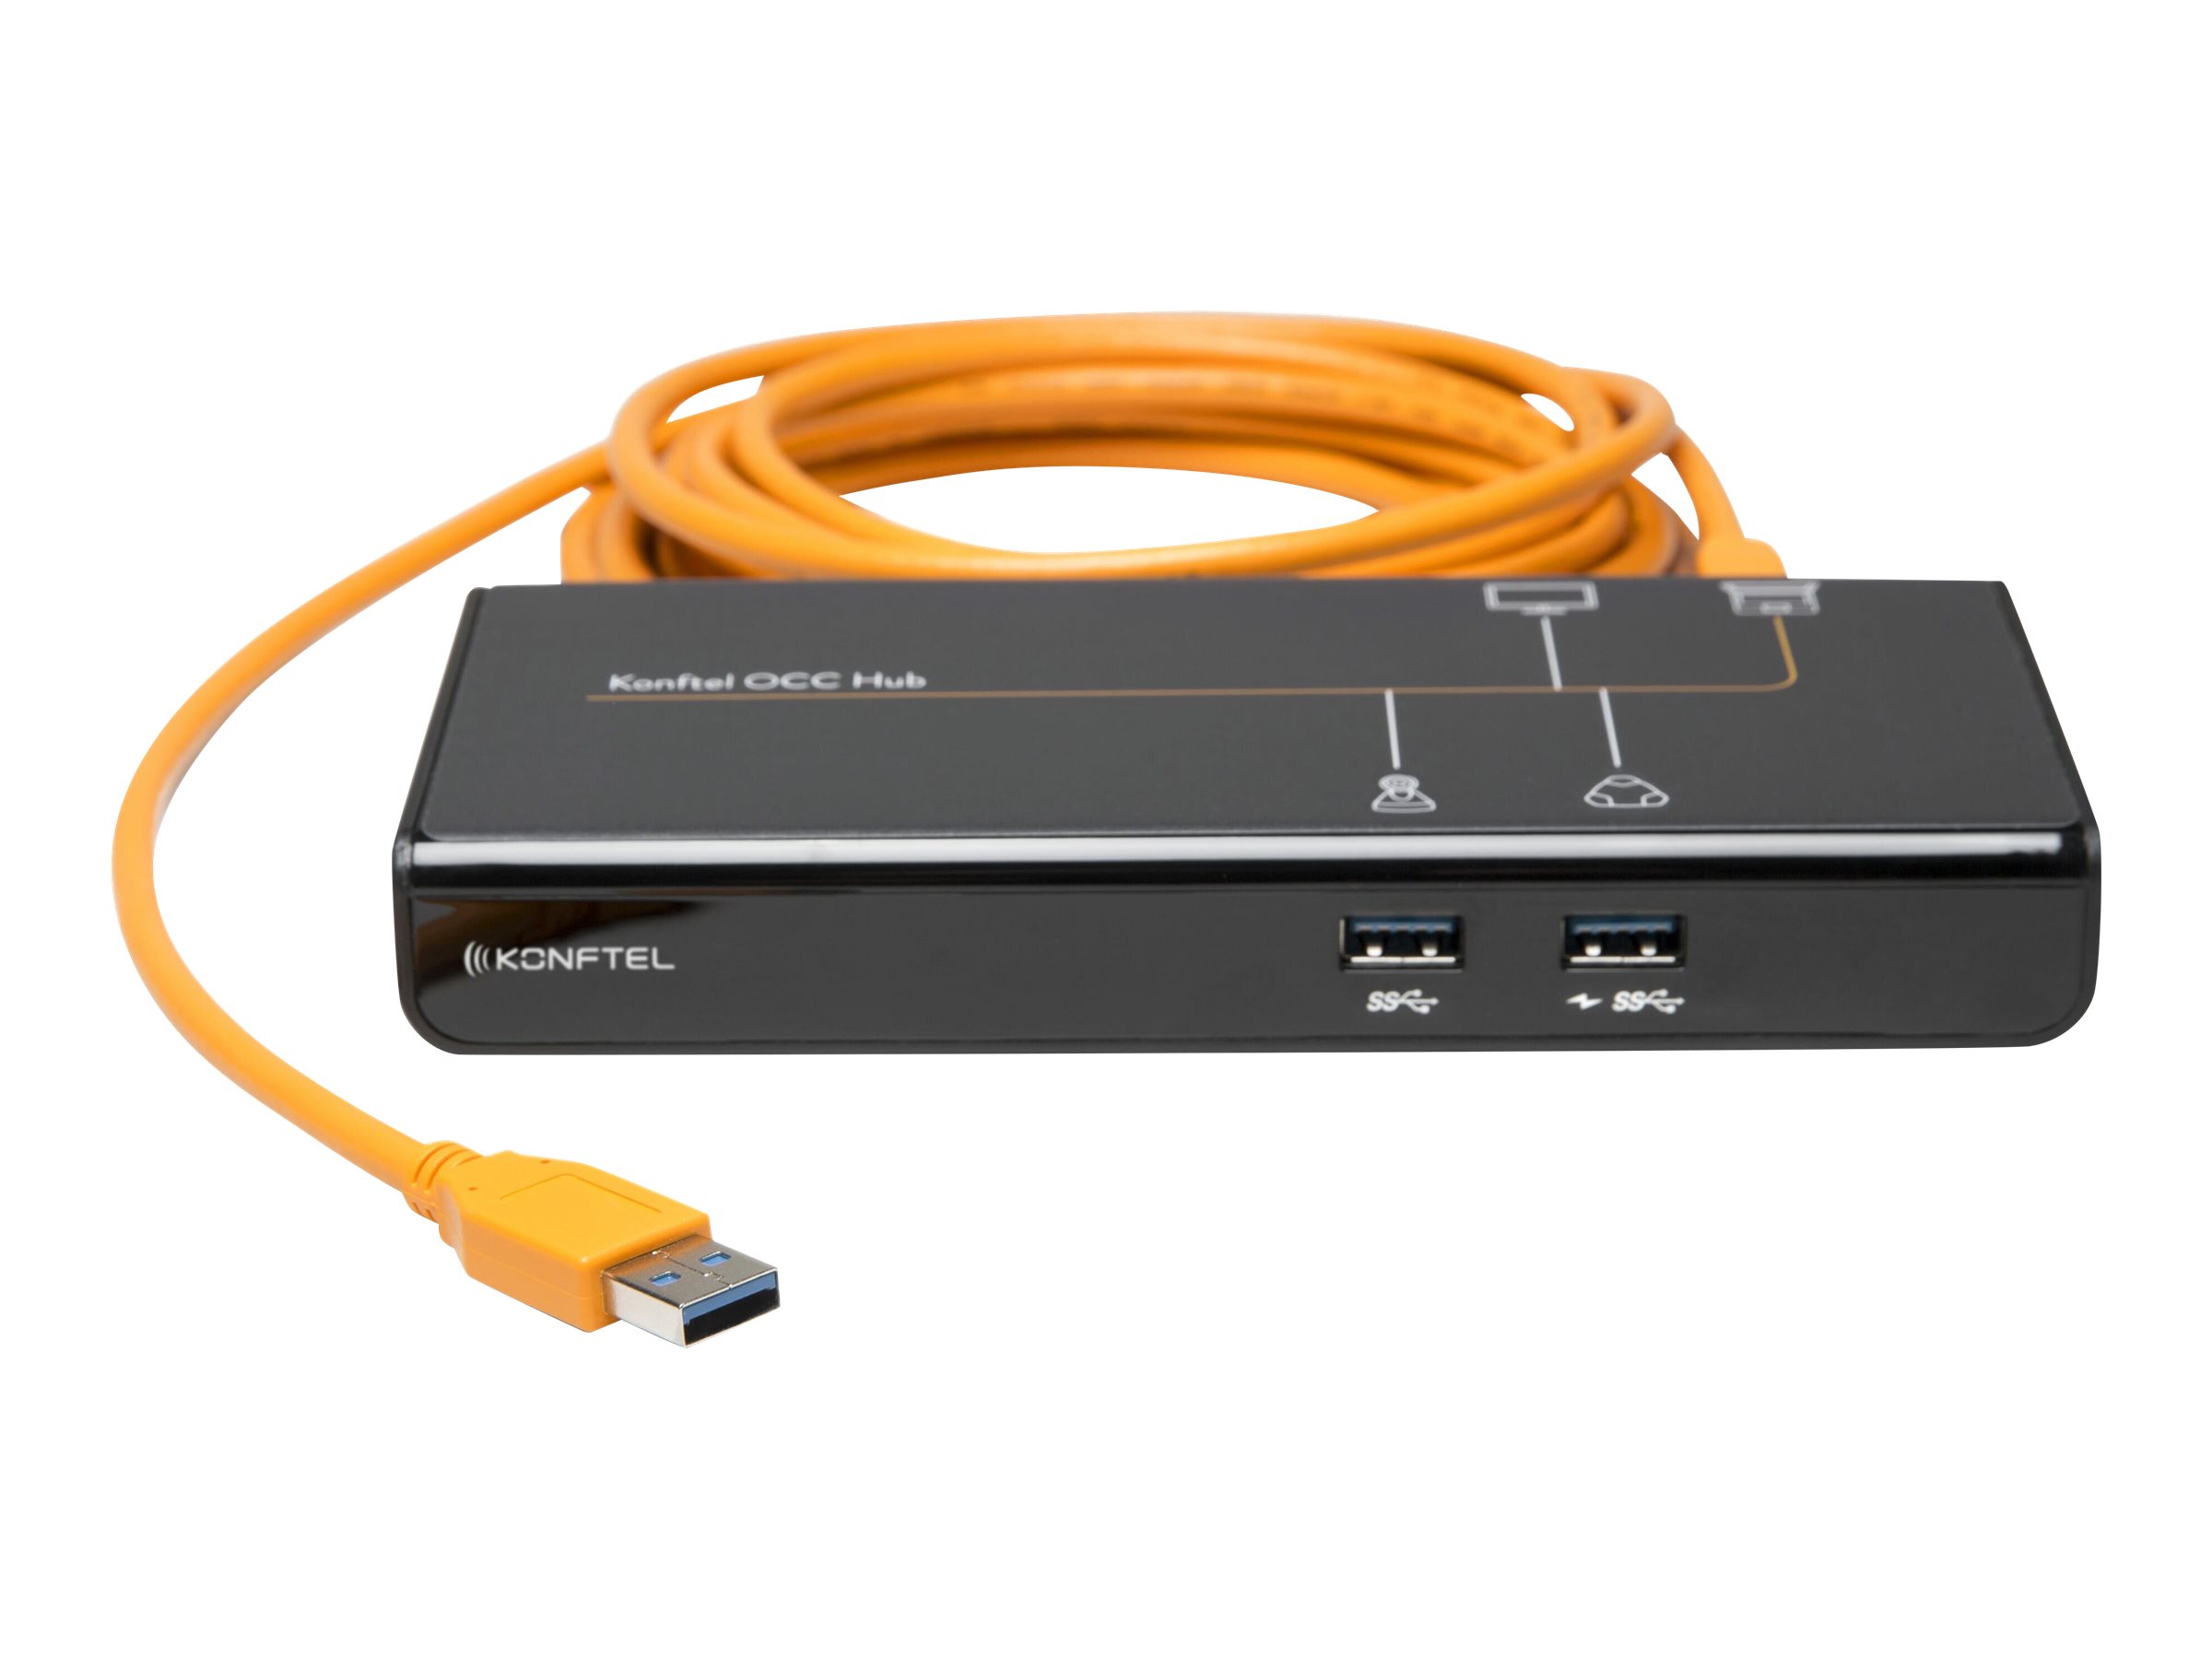 Konftel One Cable Connection Hub - Videokonferenzkomponente